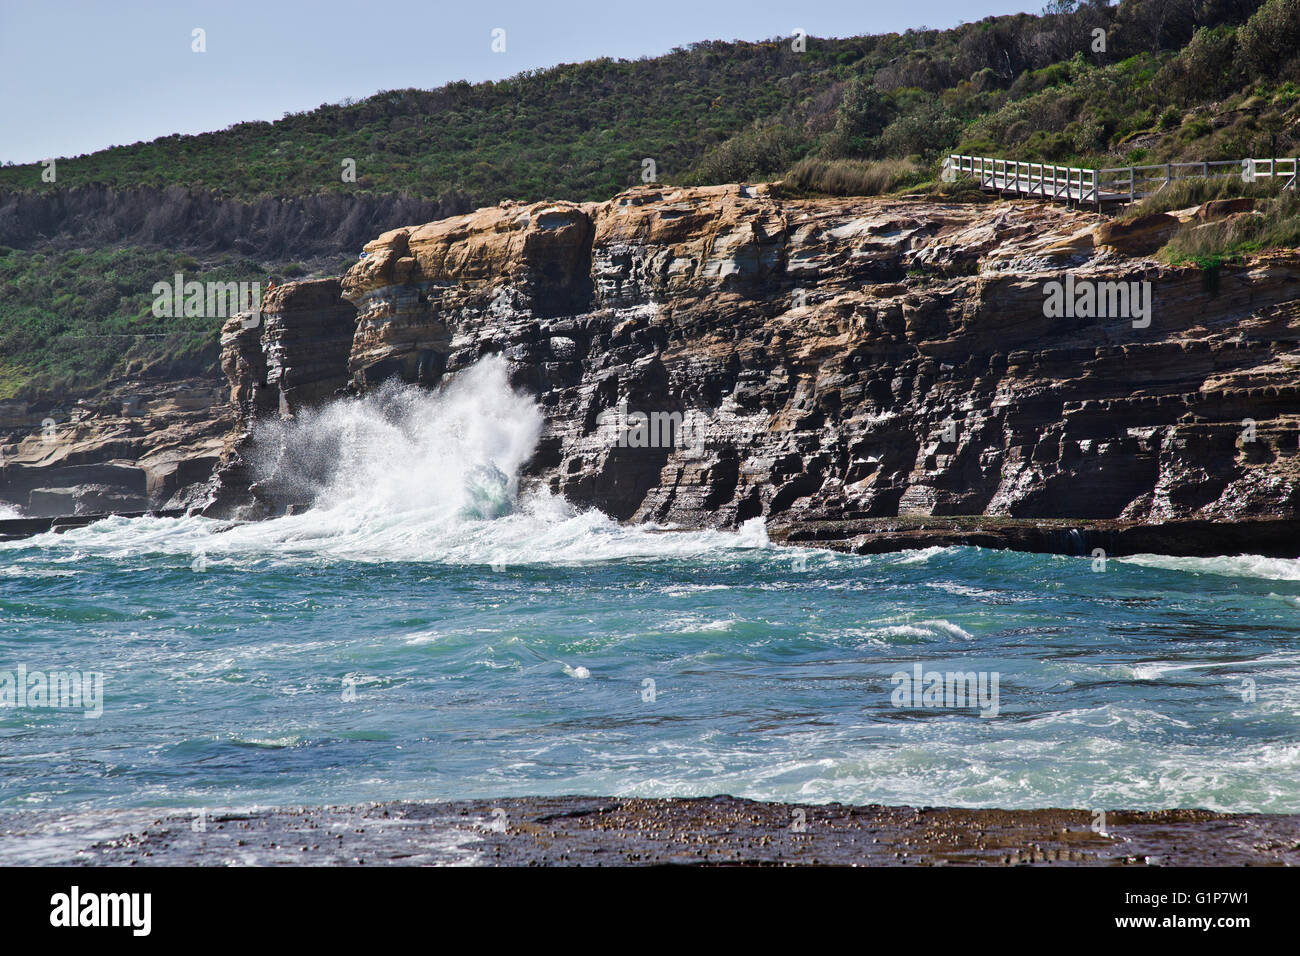 Australia, New South Wales, Central Coast, Bouddi National Park, pounding surf on a rock face of the Bouddi Peninsula coast Stock Photo